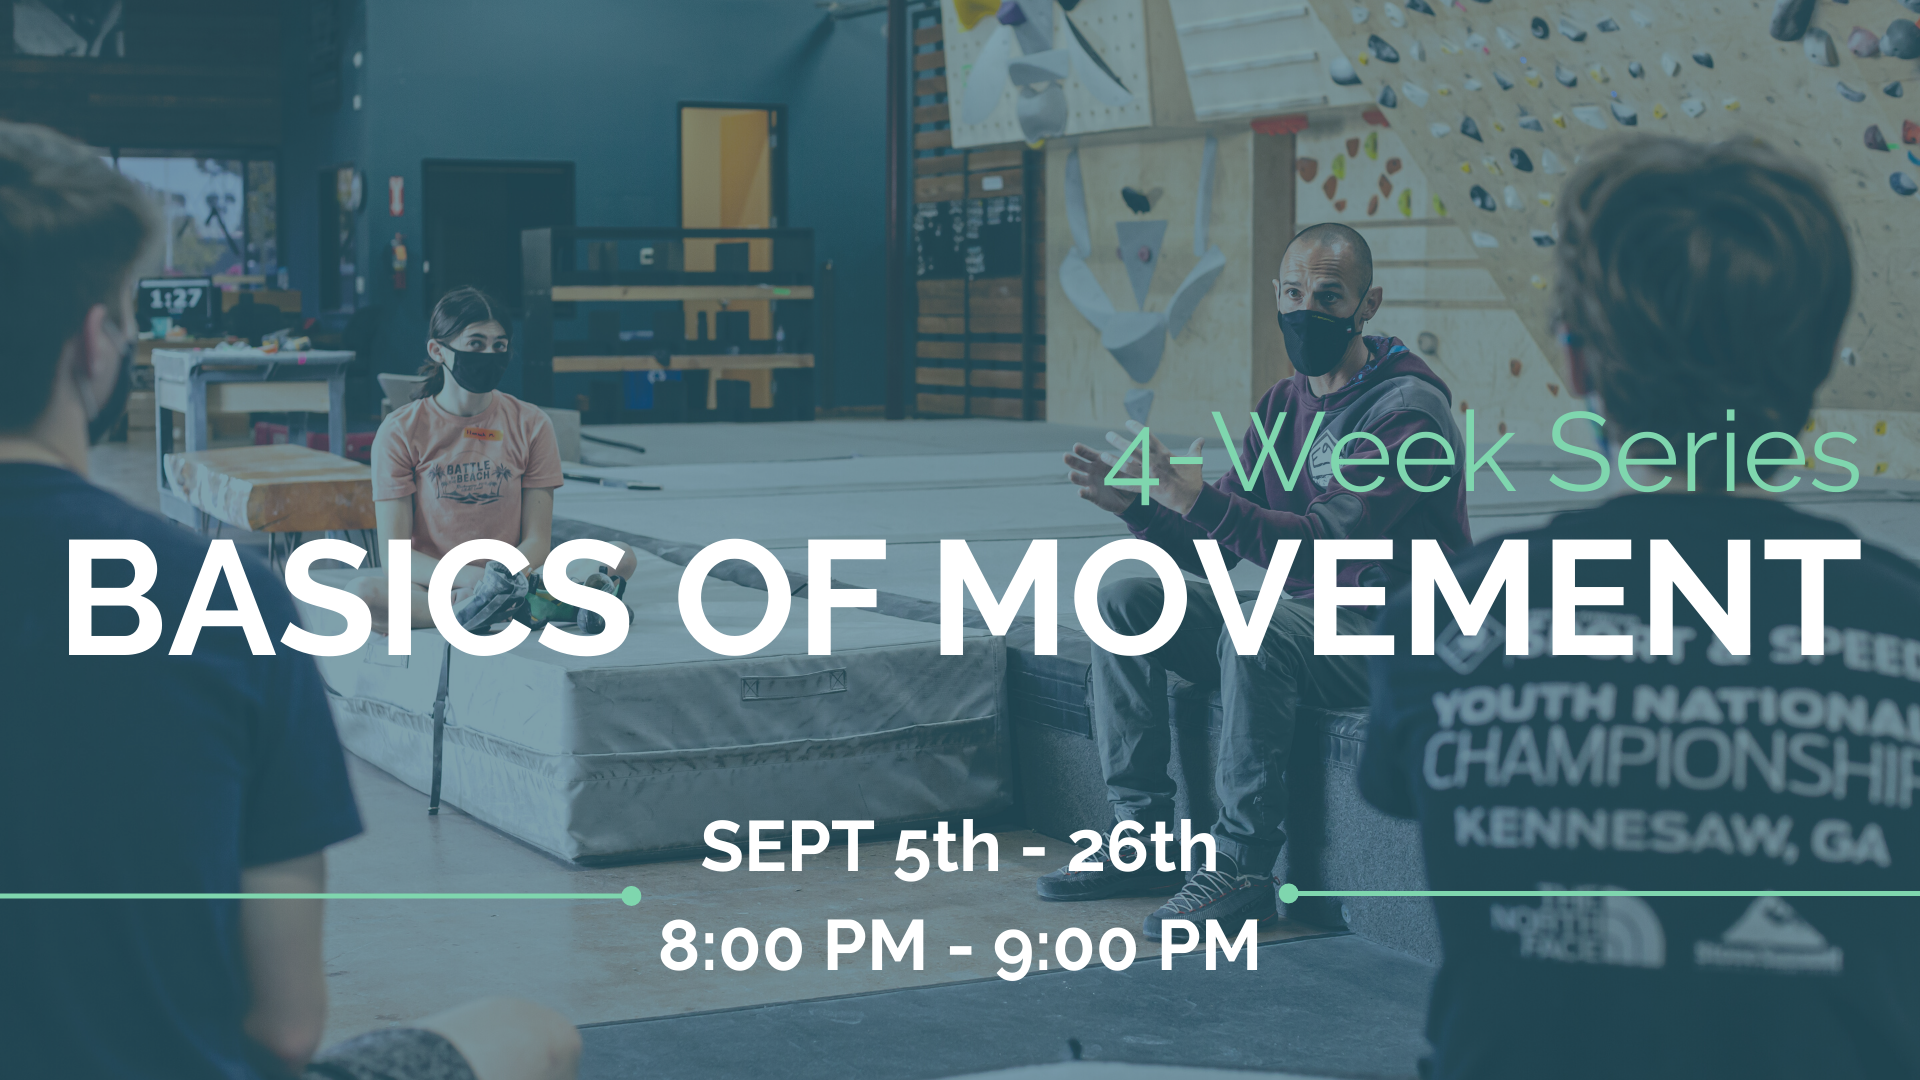 Basics of Movement (4-Week Series)